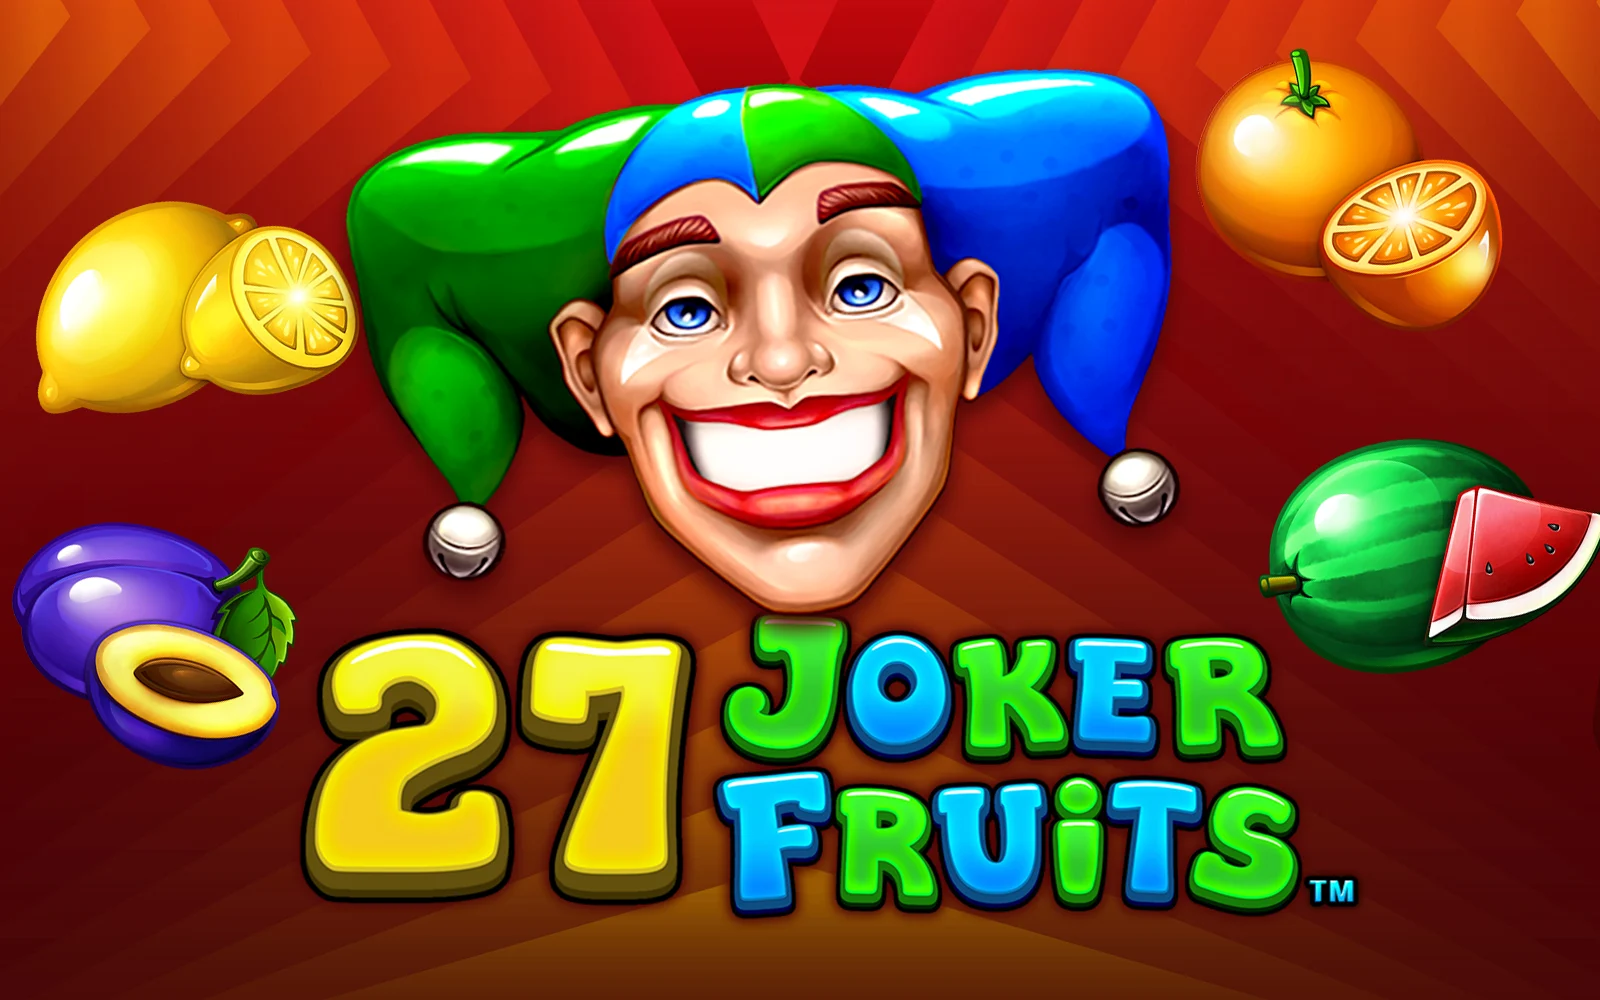 Gioca a 27 Joker Fruits sul casino online Starcasino.be